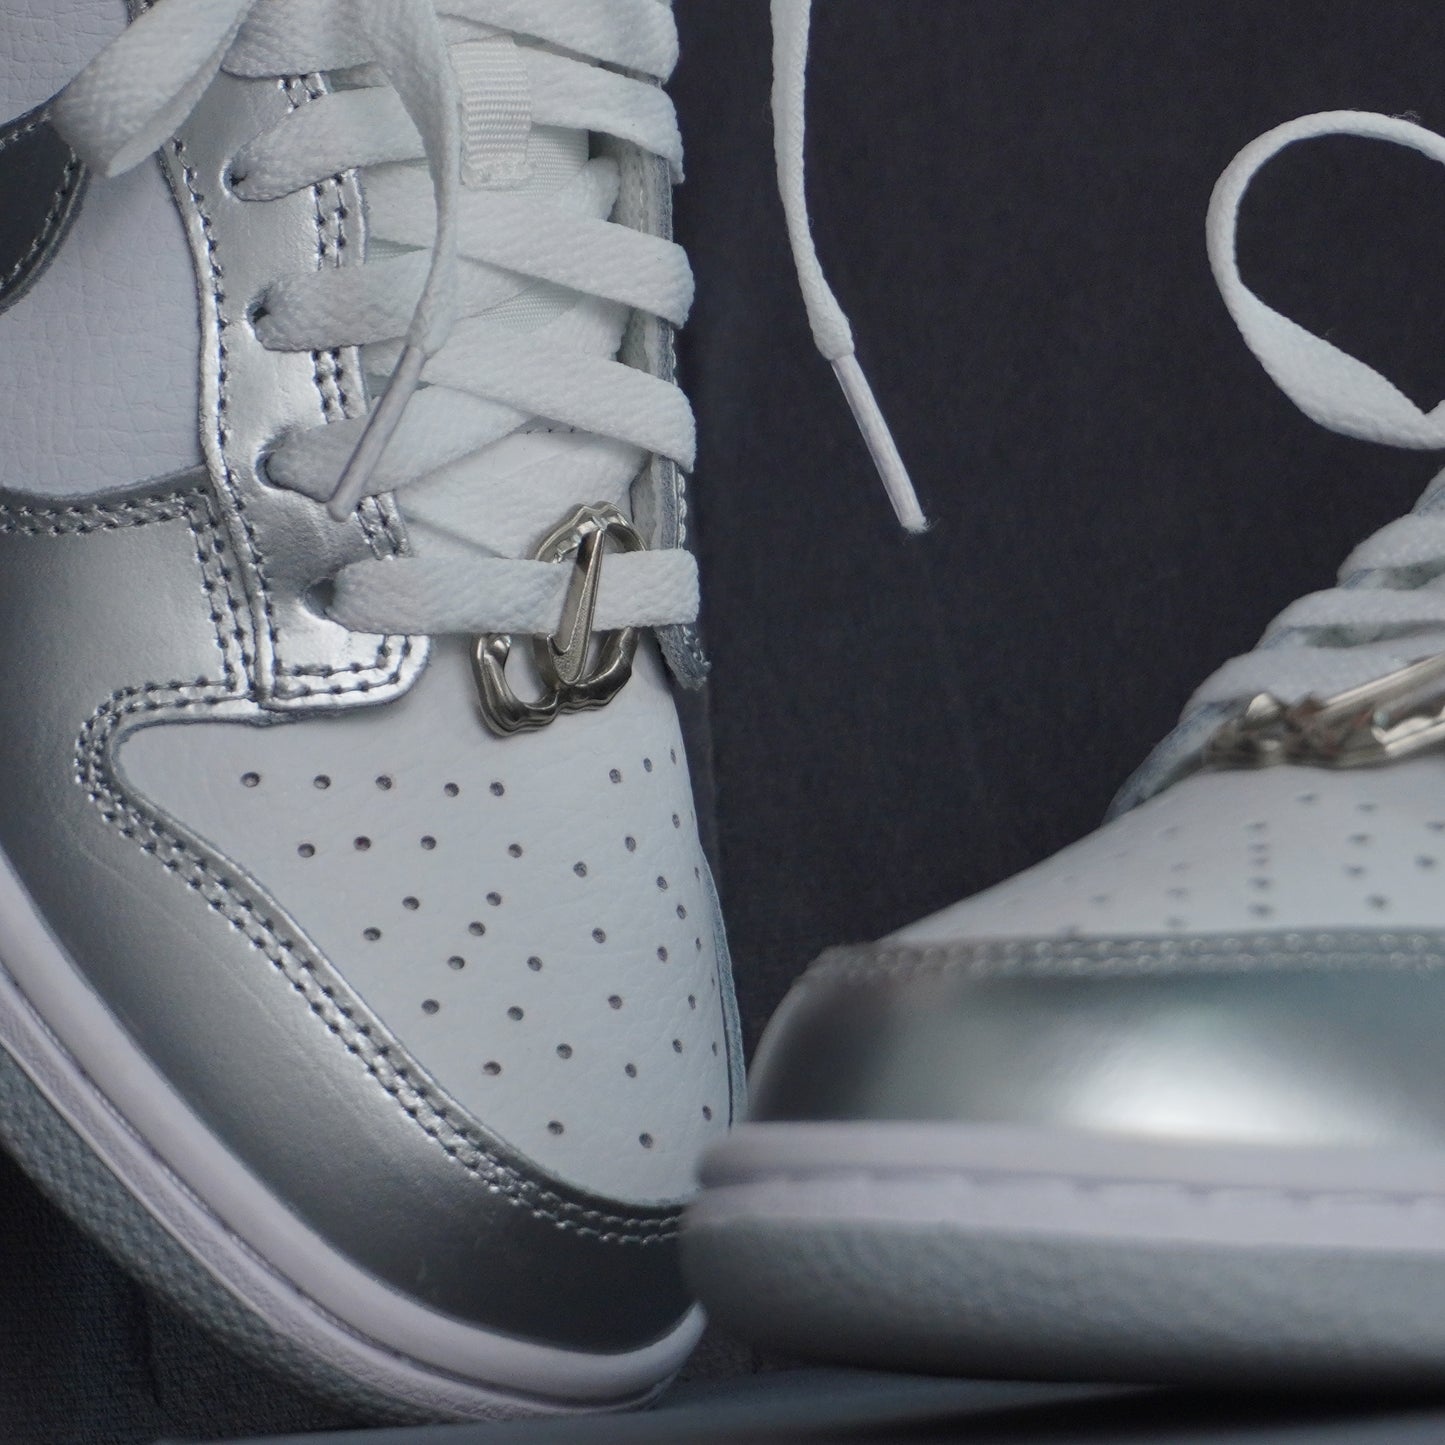 Nike  Dunk Low "Metallic Silver"